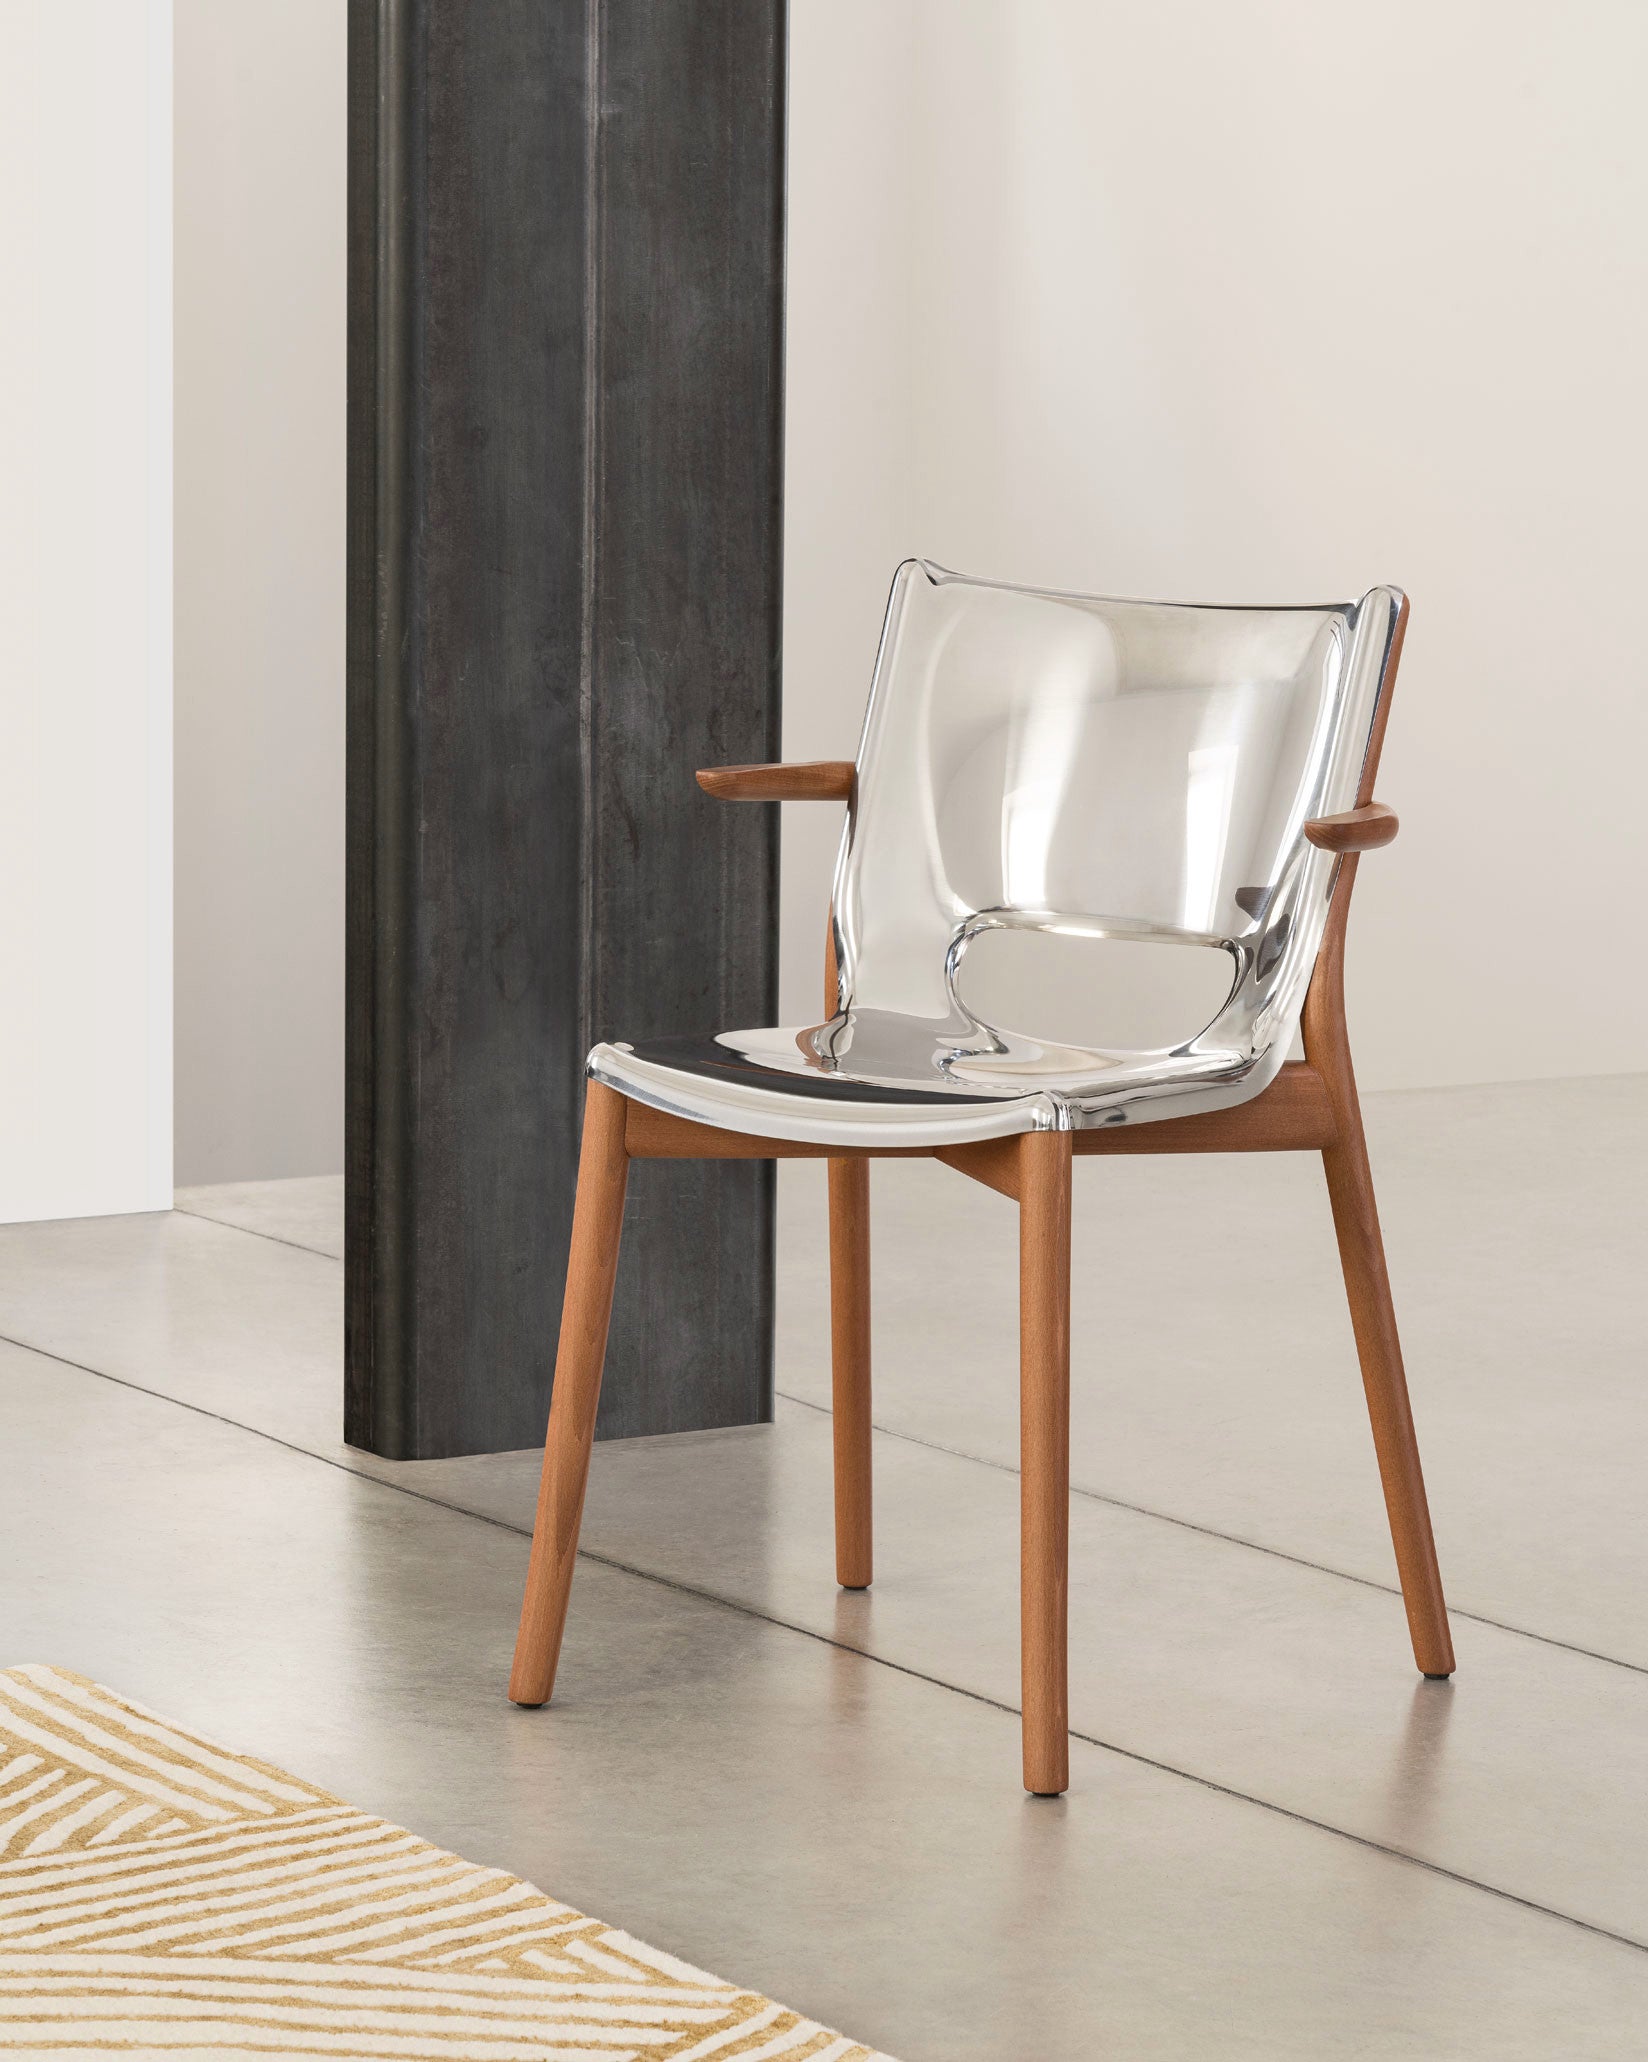 Cafè Chair Sgabello Cucina by Philippe Starck - Arredamento e